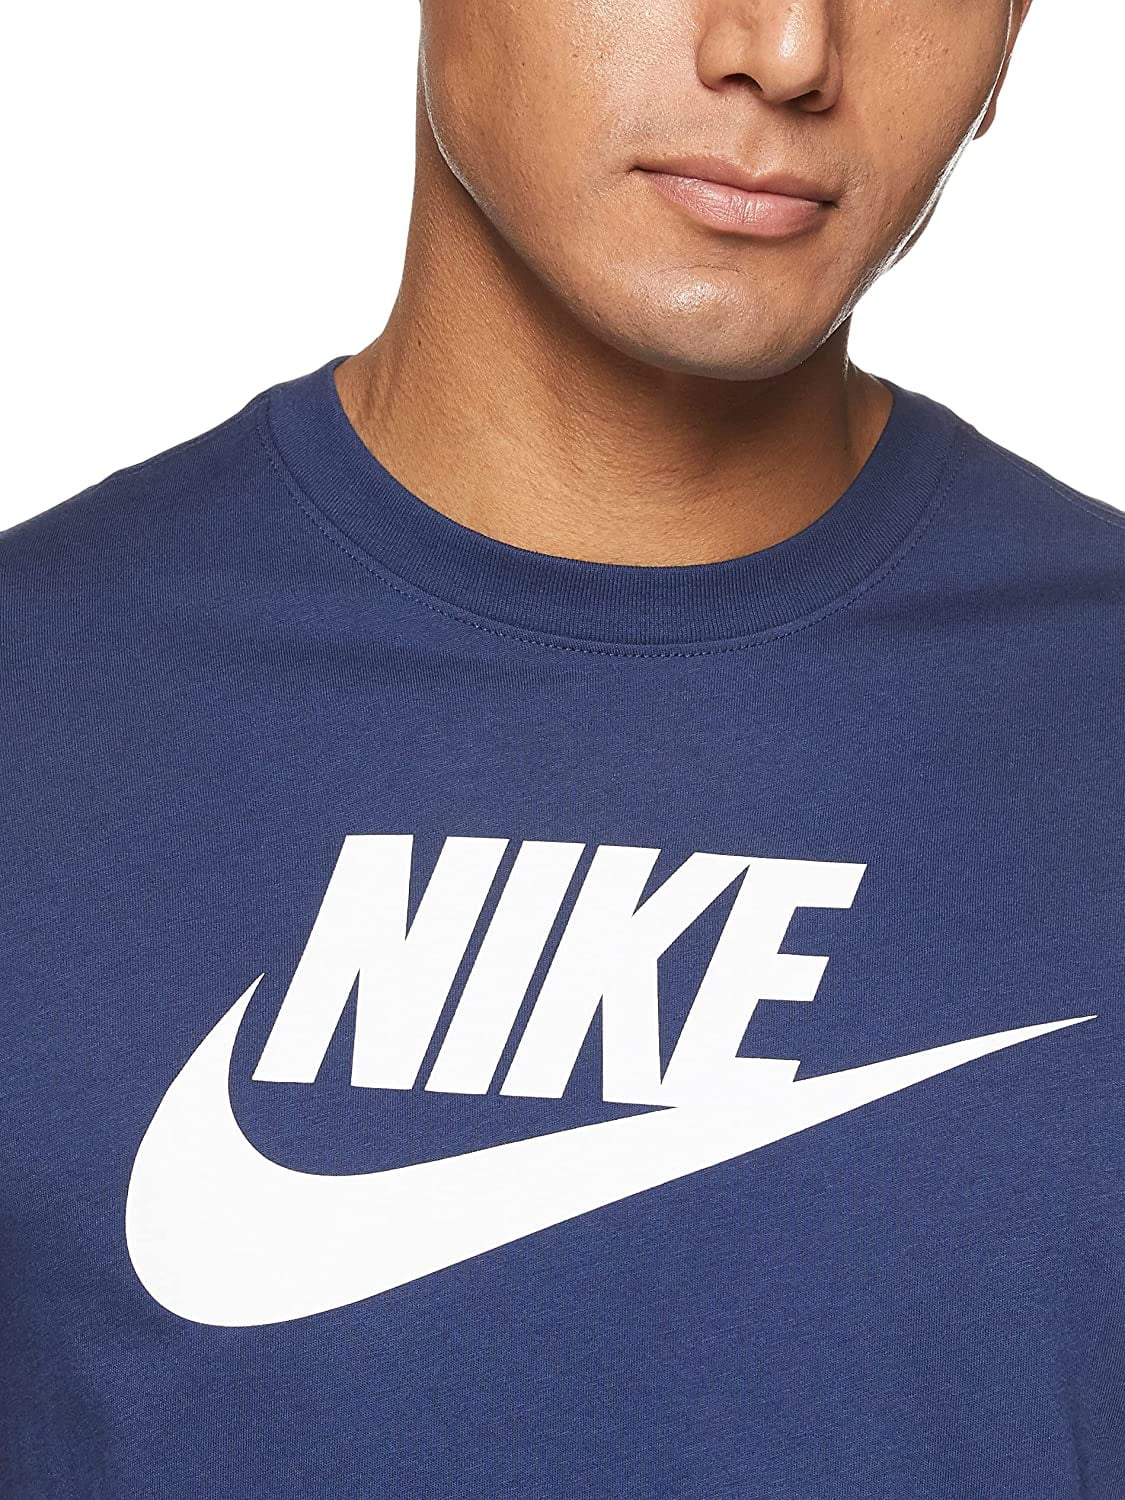 Nike Dri-Fit Middlebury T-Shirt (Navy) Medium